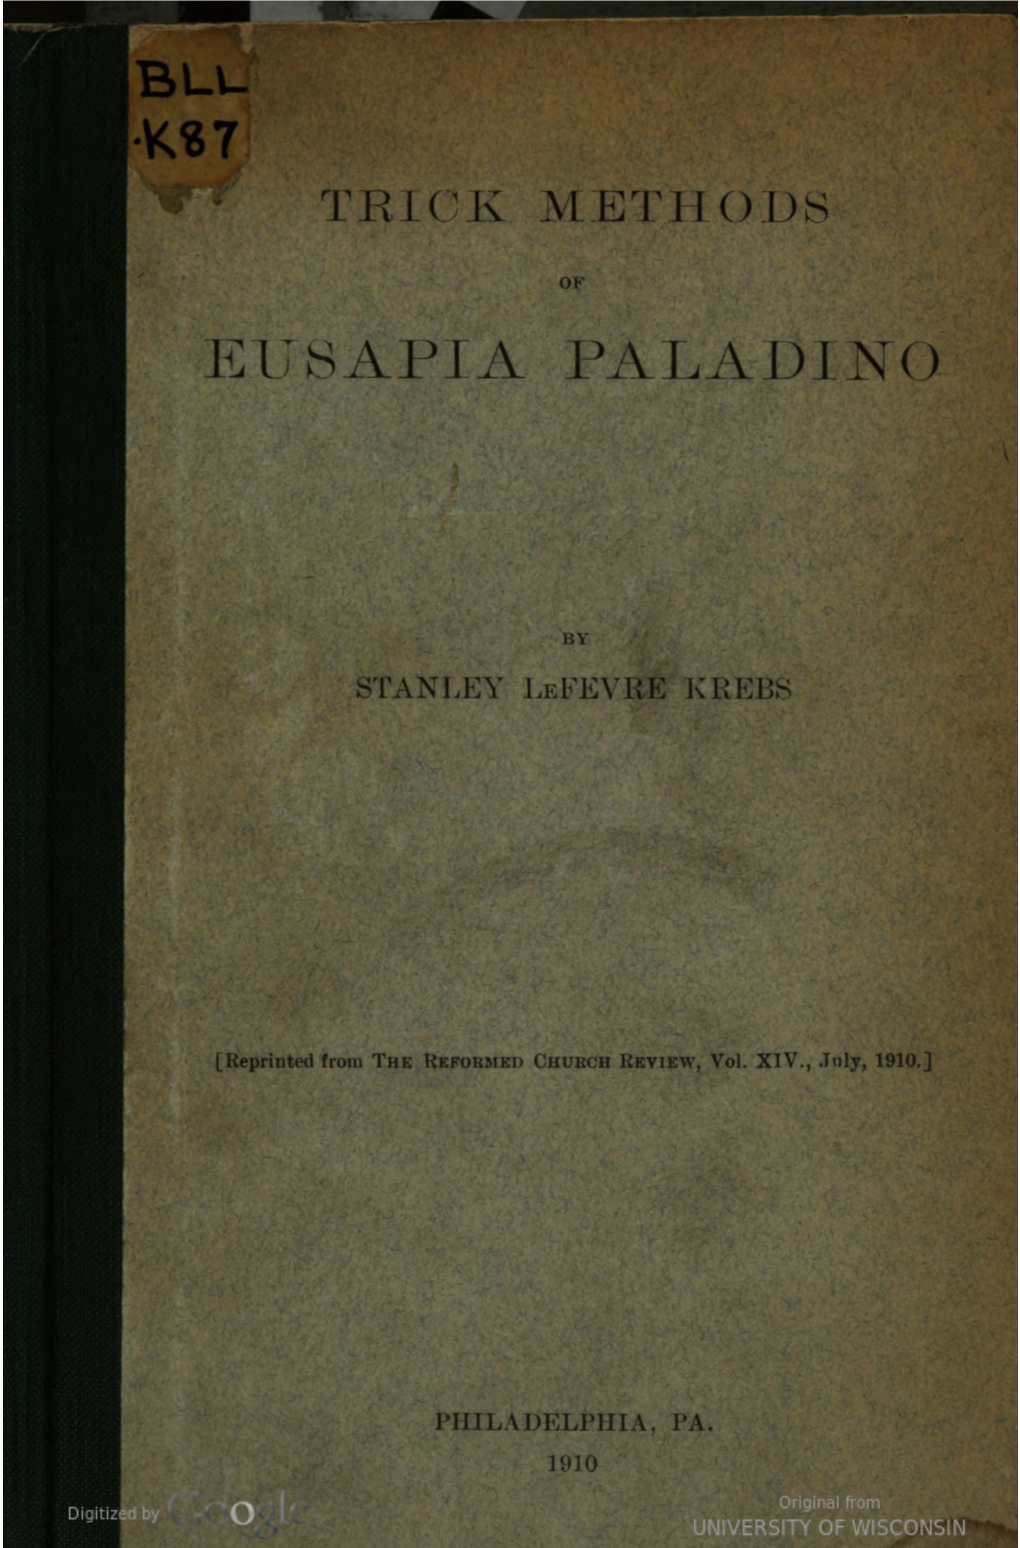 Trick Methods of Eusapia Paladino / by Stanley Lefevre Krebs